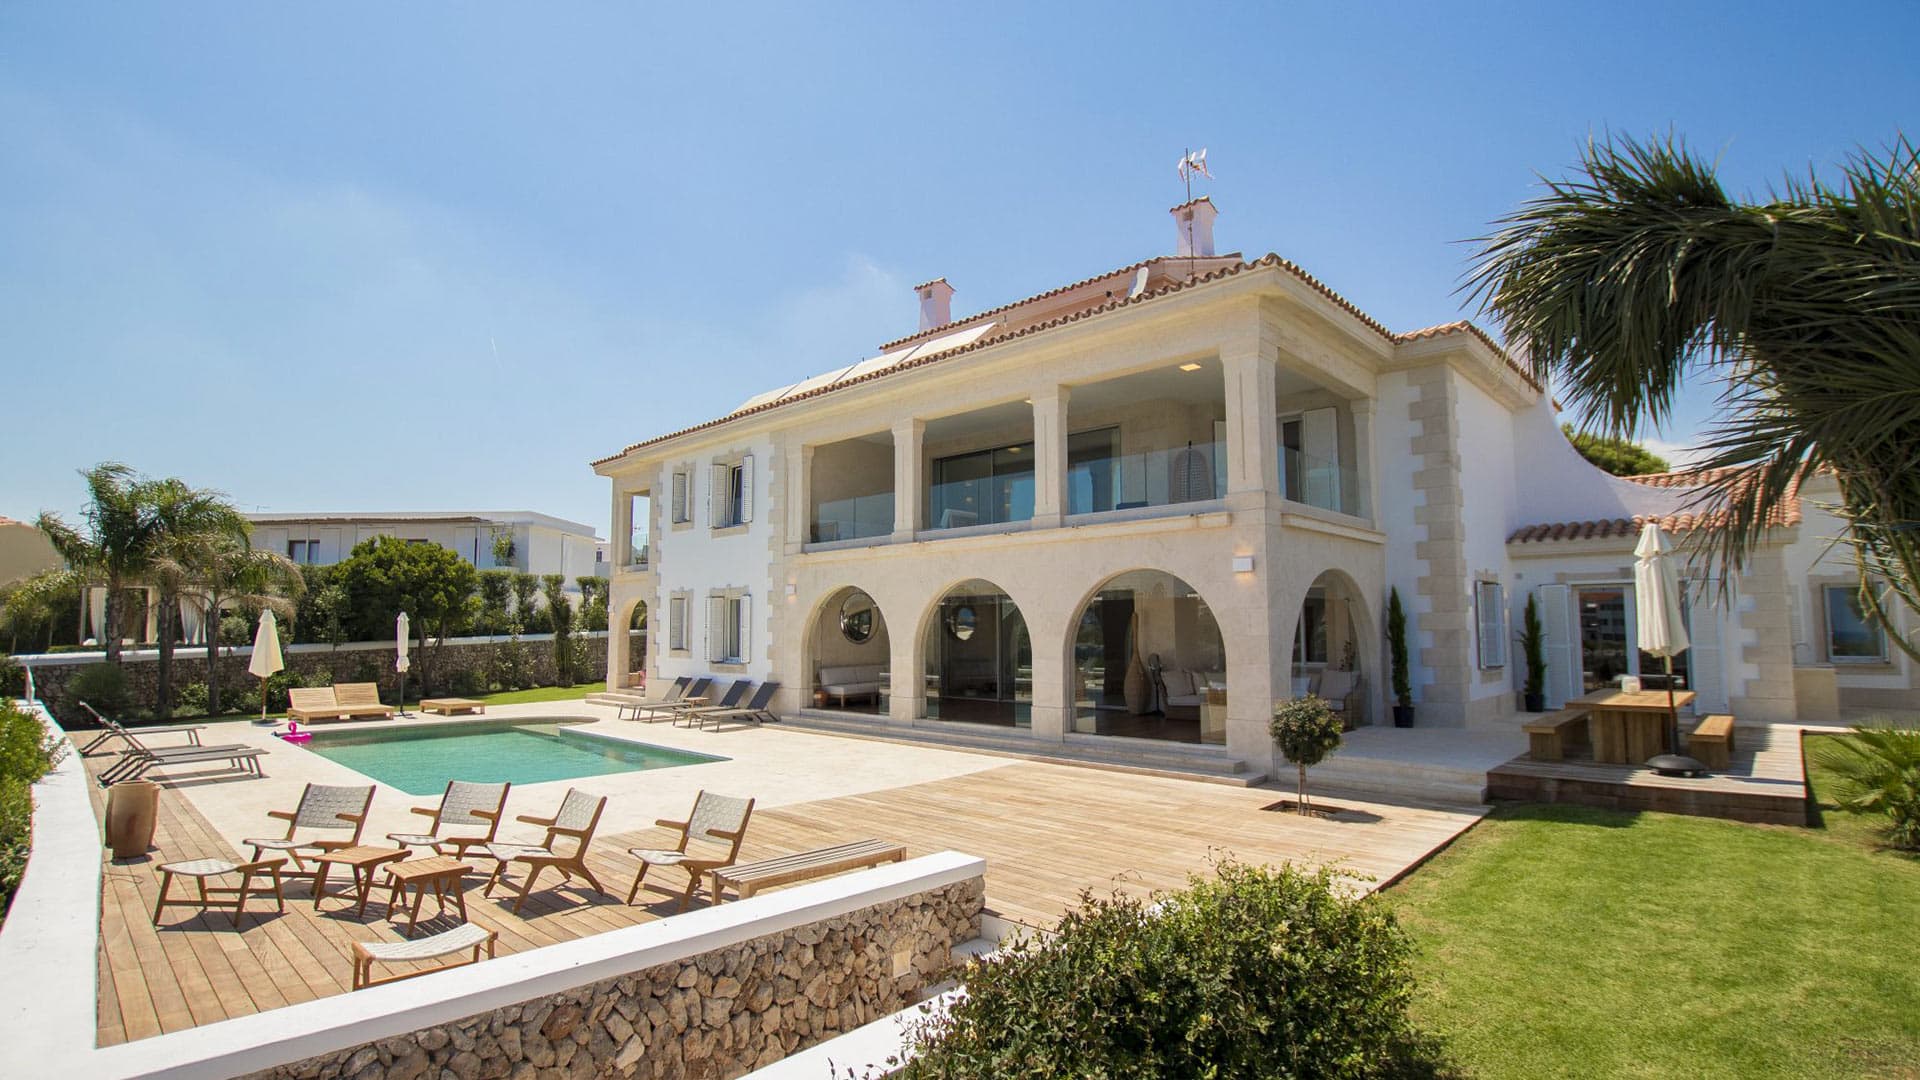 Villa Villa Manicienta, Rental in Menorca